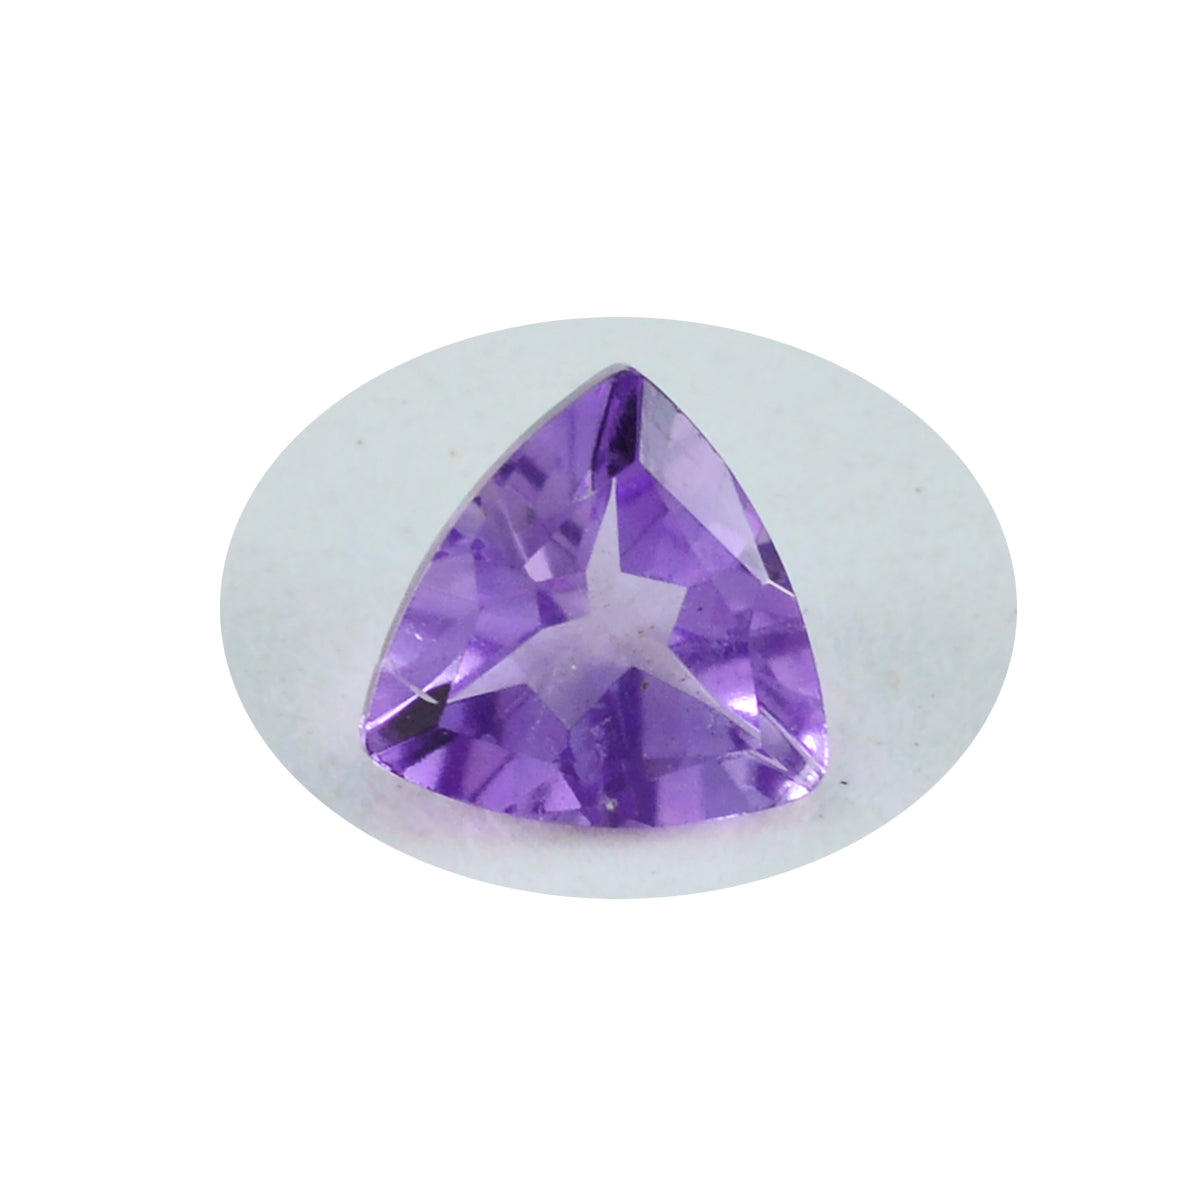 Riyogems 1PC Genuine Purple Amethyst Faceted 10x10 mm Trillion Shape wonderful Quality Loose Gemstone